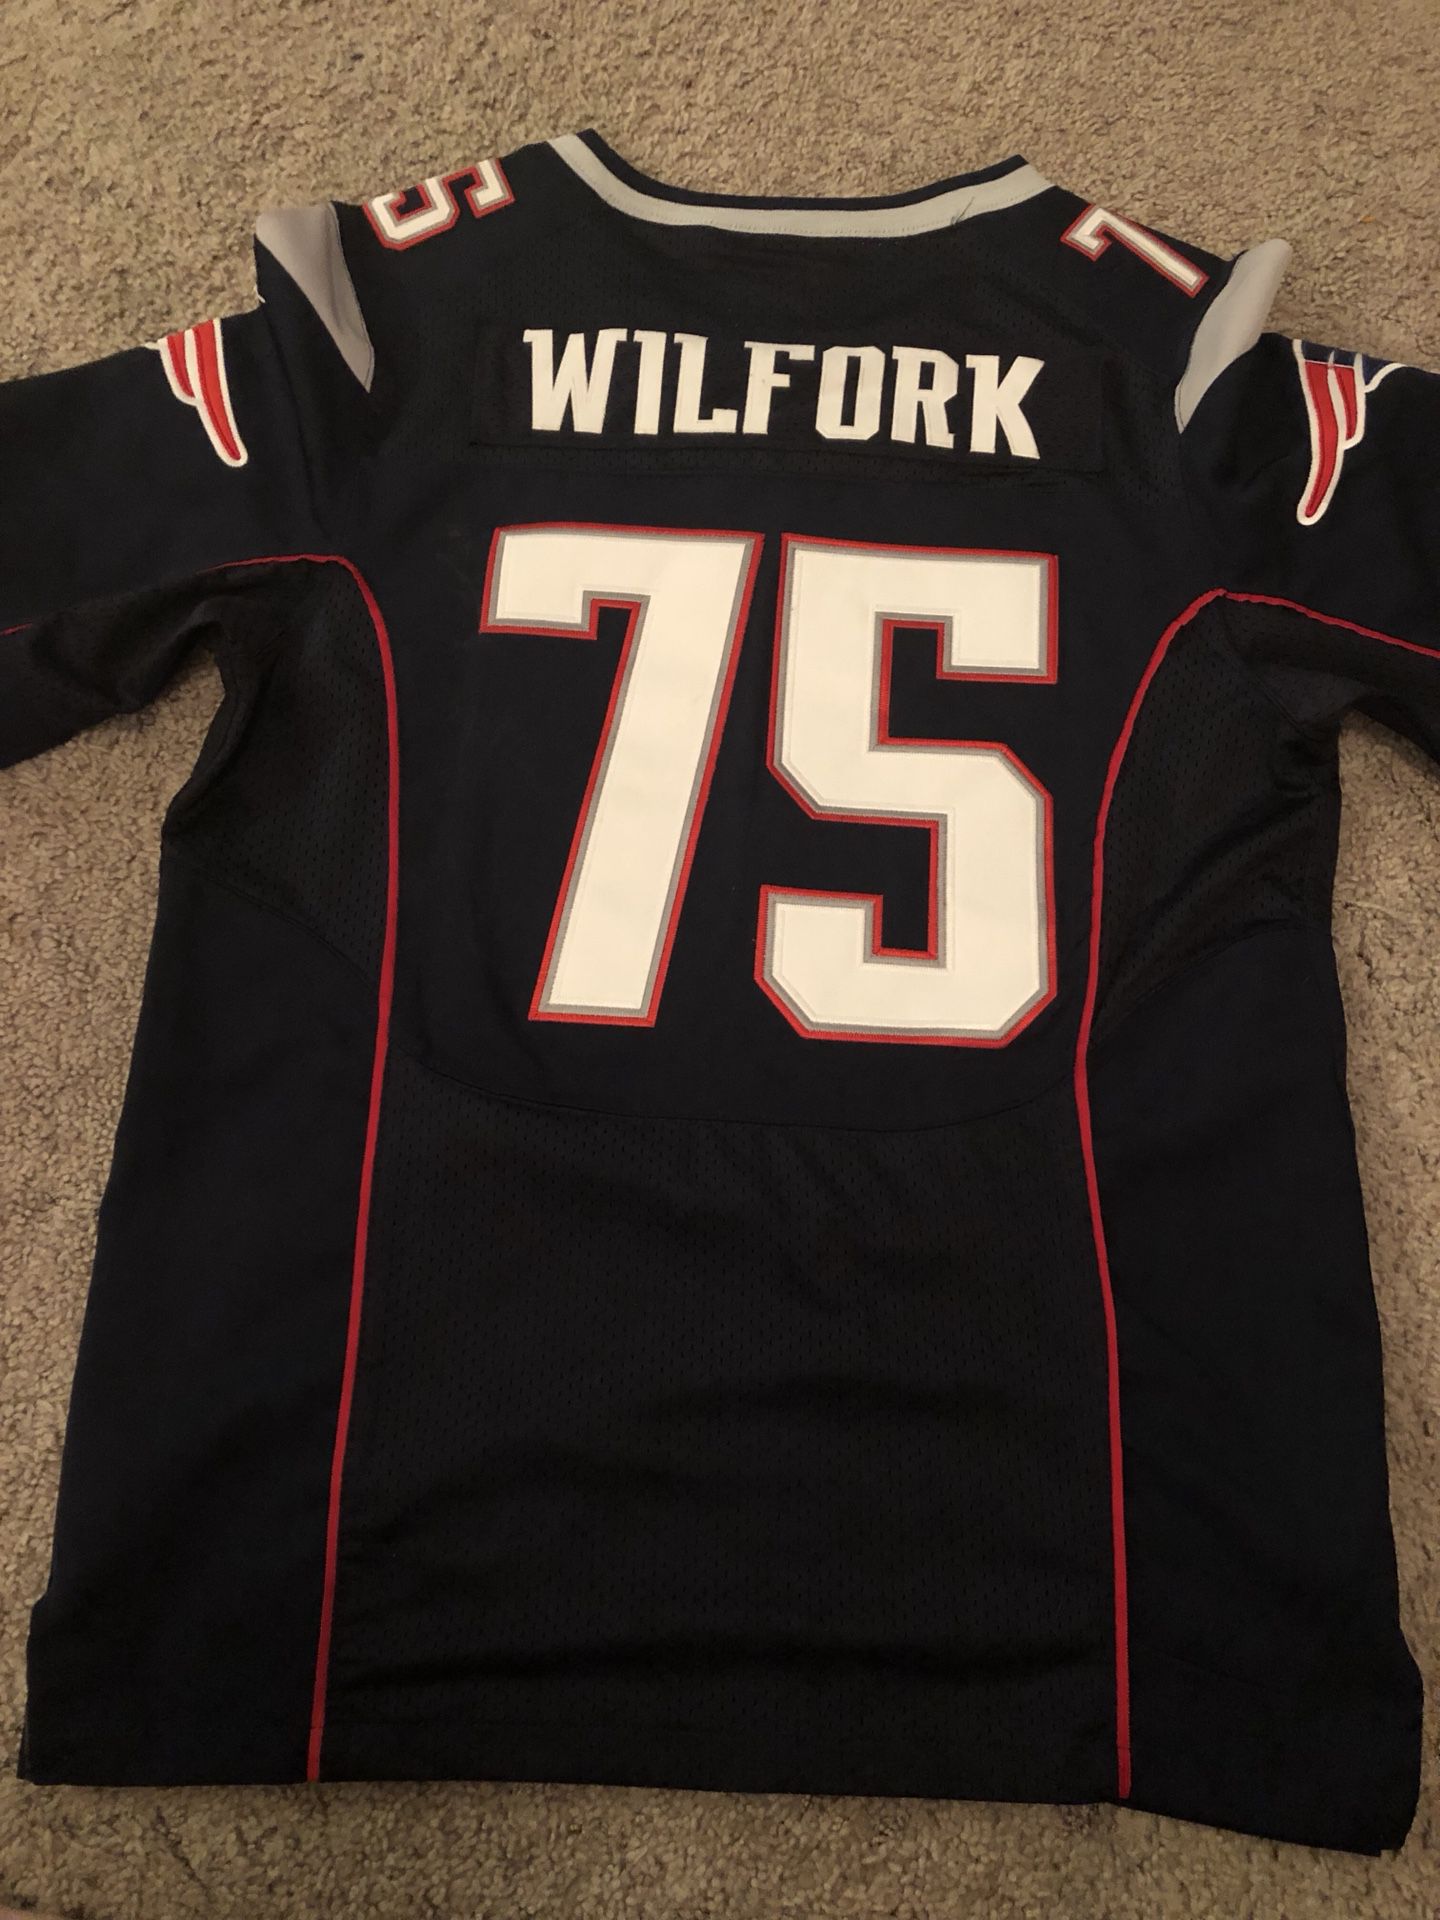 Vince Wilfork #75 Patriots NFL Nike Jersey Size 44